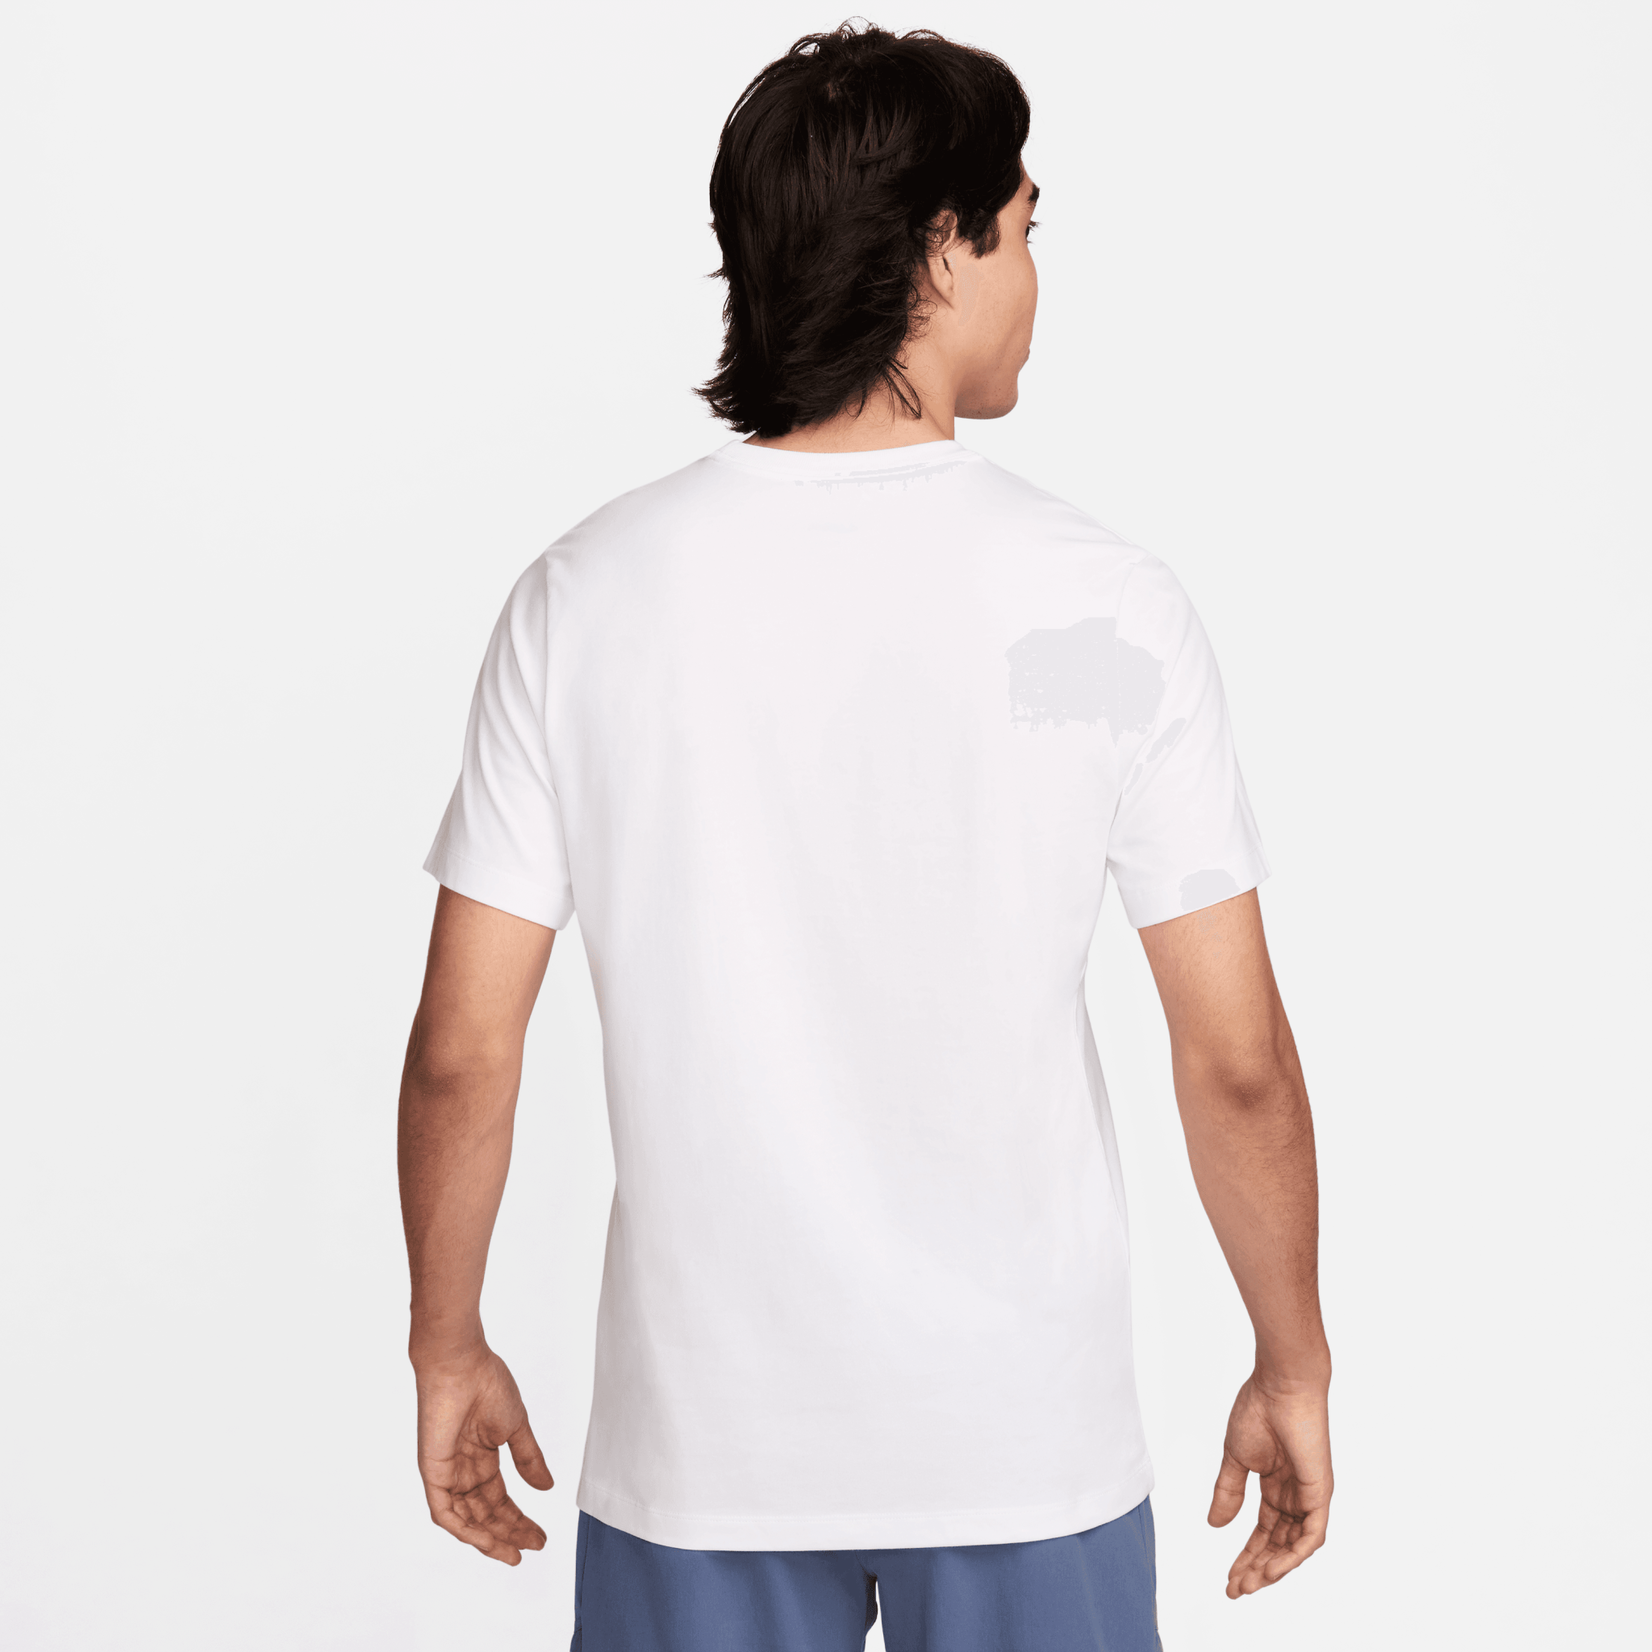 Nike Tottenham Hotspurs Men's Soccer T-Shirt